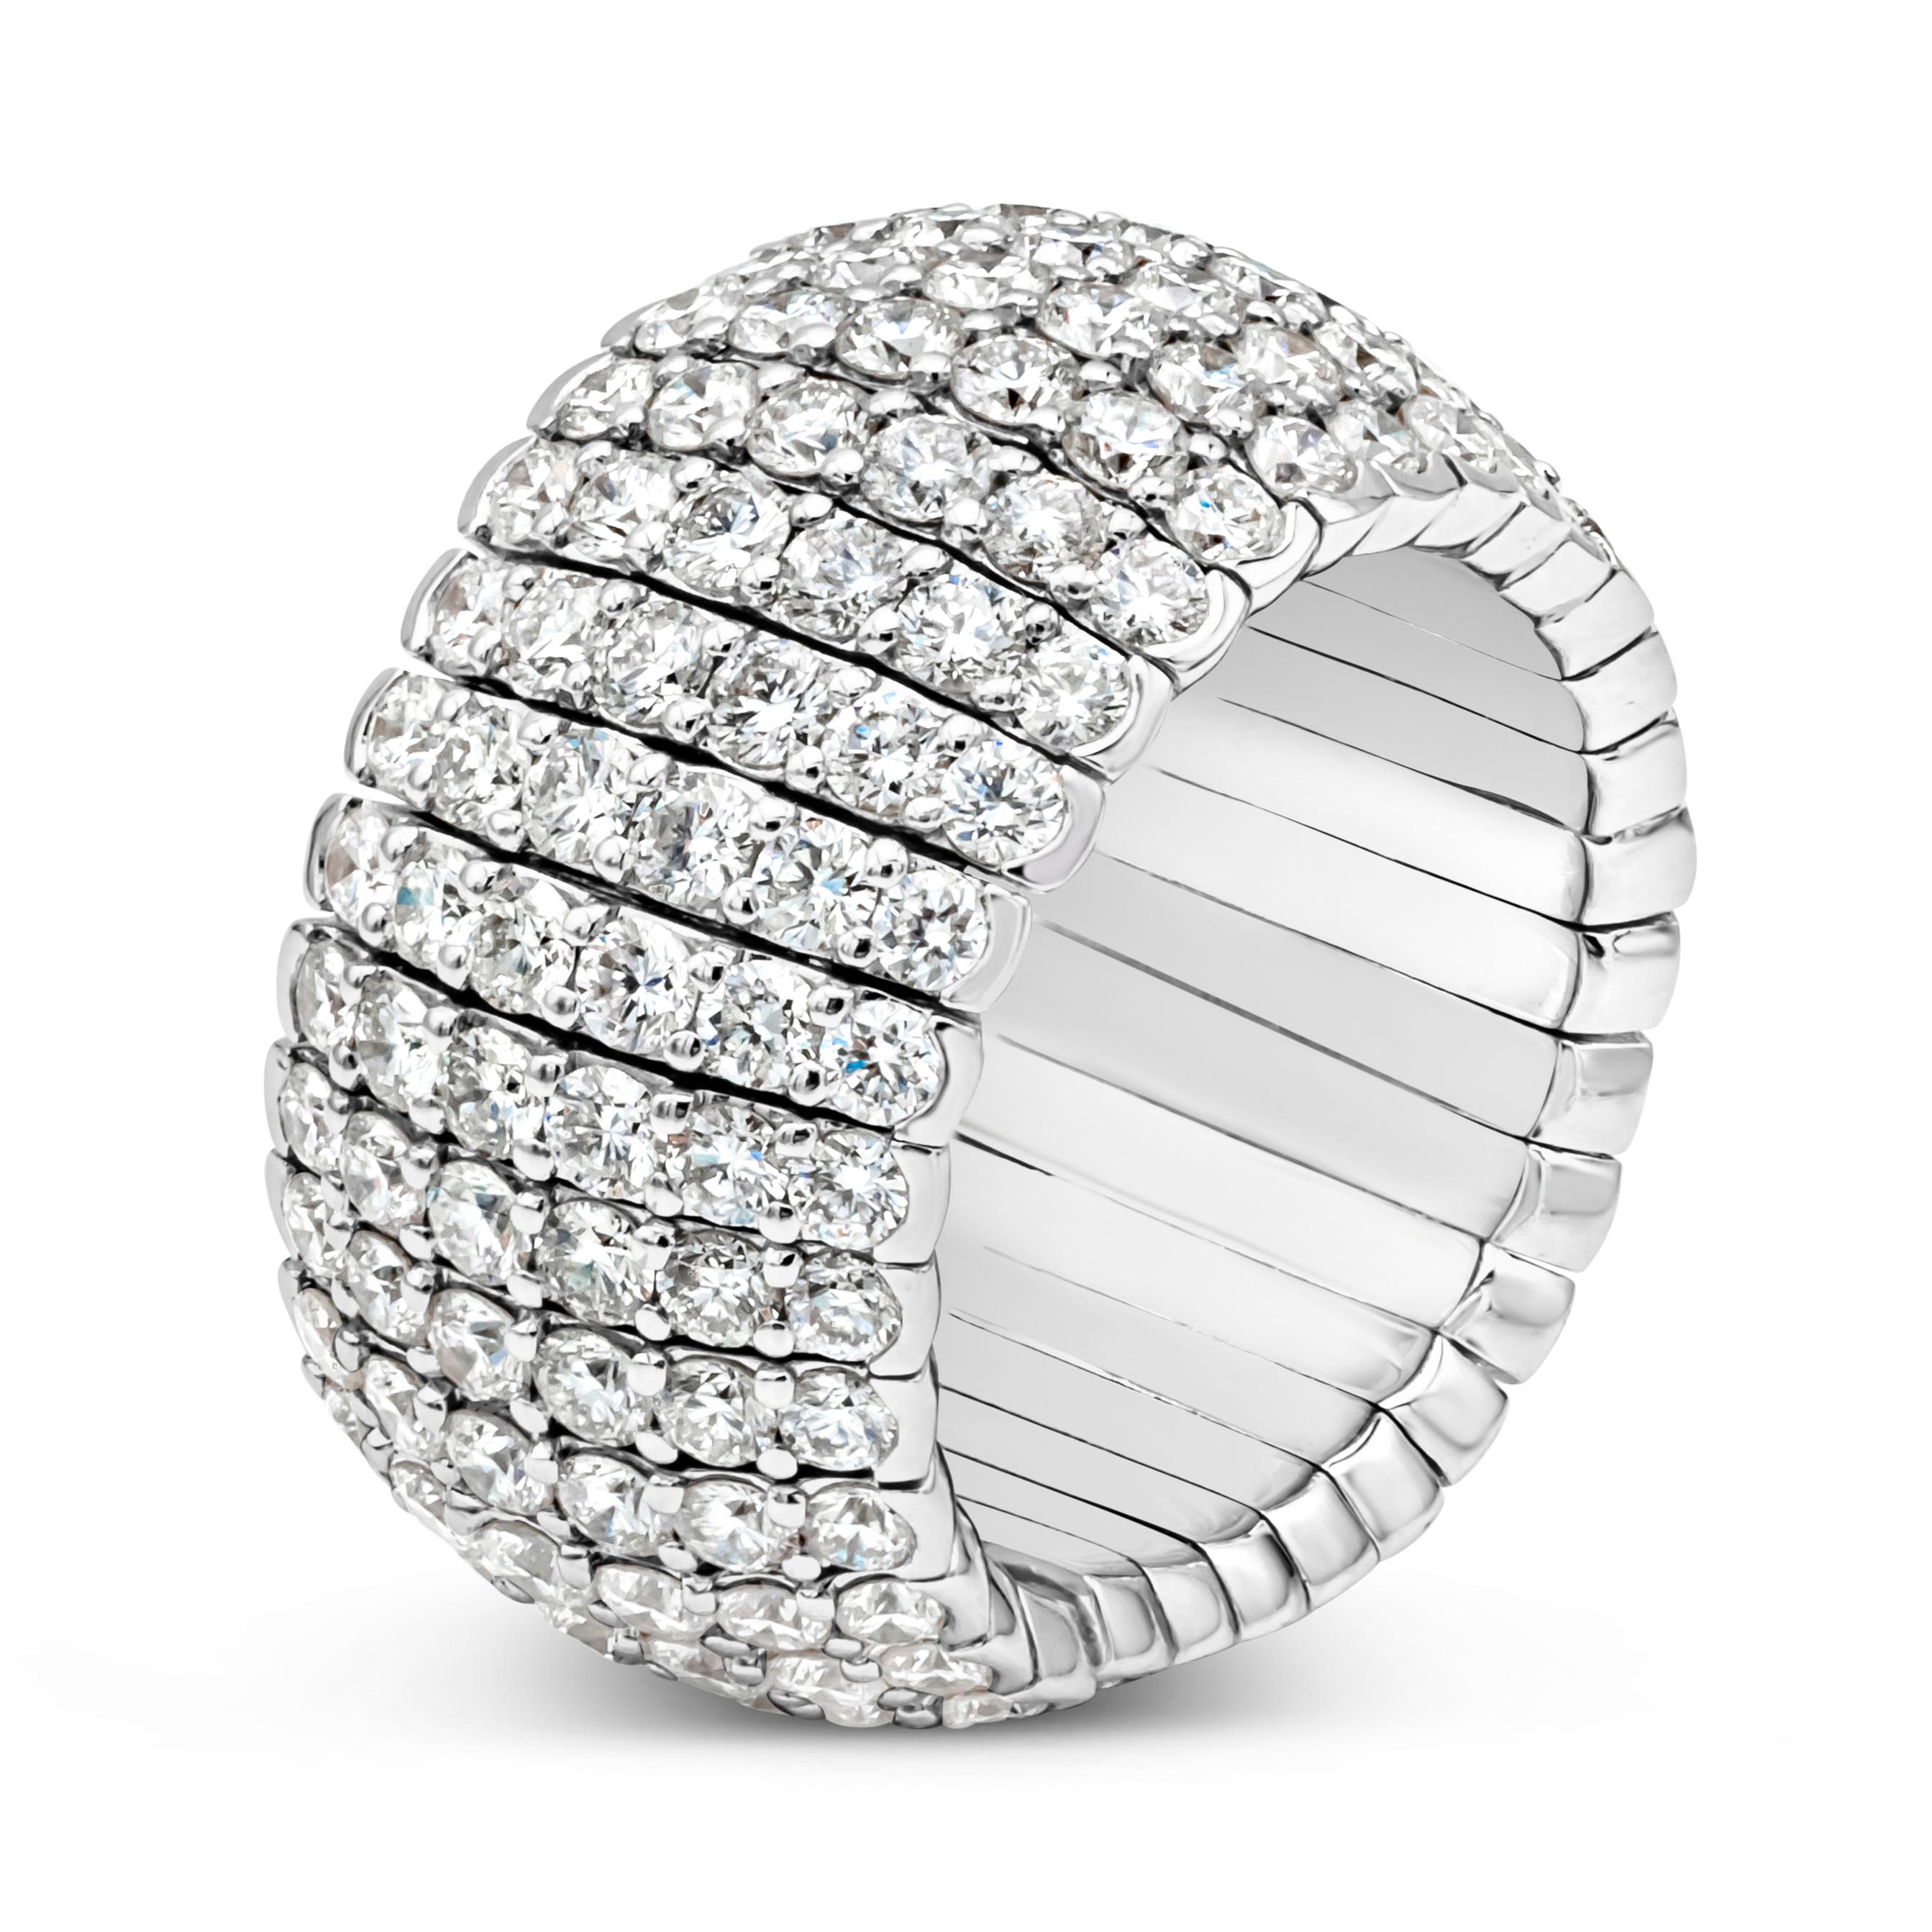 Contemporary Roman Malakov 4.92 Carats Total Round Cut Diamond Flexible Pave Fashion Ring For Sale